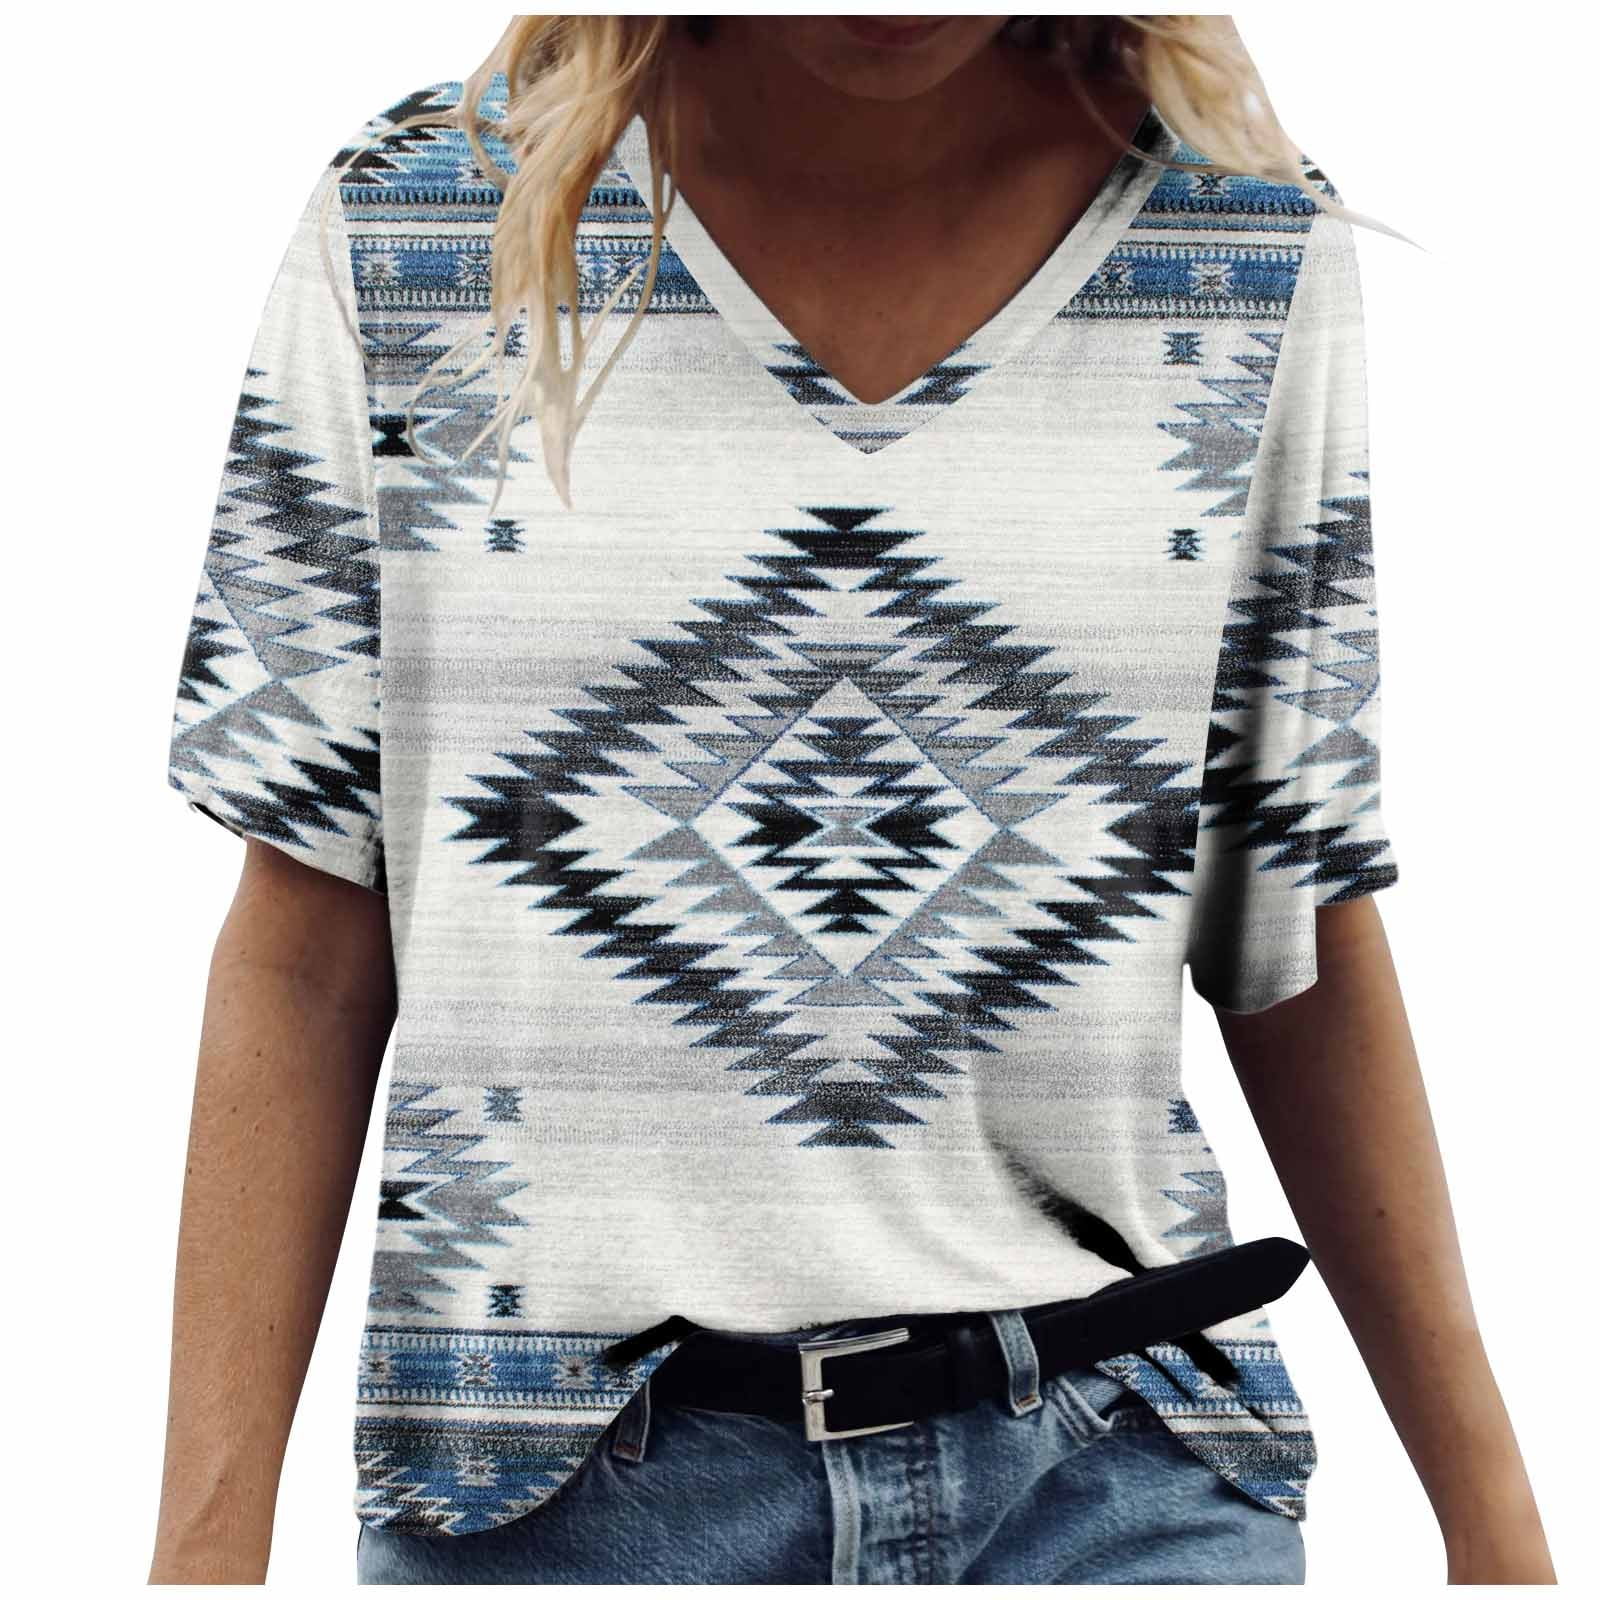 TQWQT Womens Tops Short Sleeve V Neck Western Shirts Ethnic Graphic ...